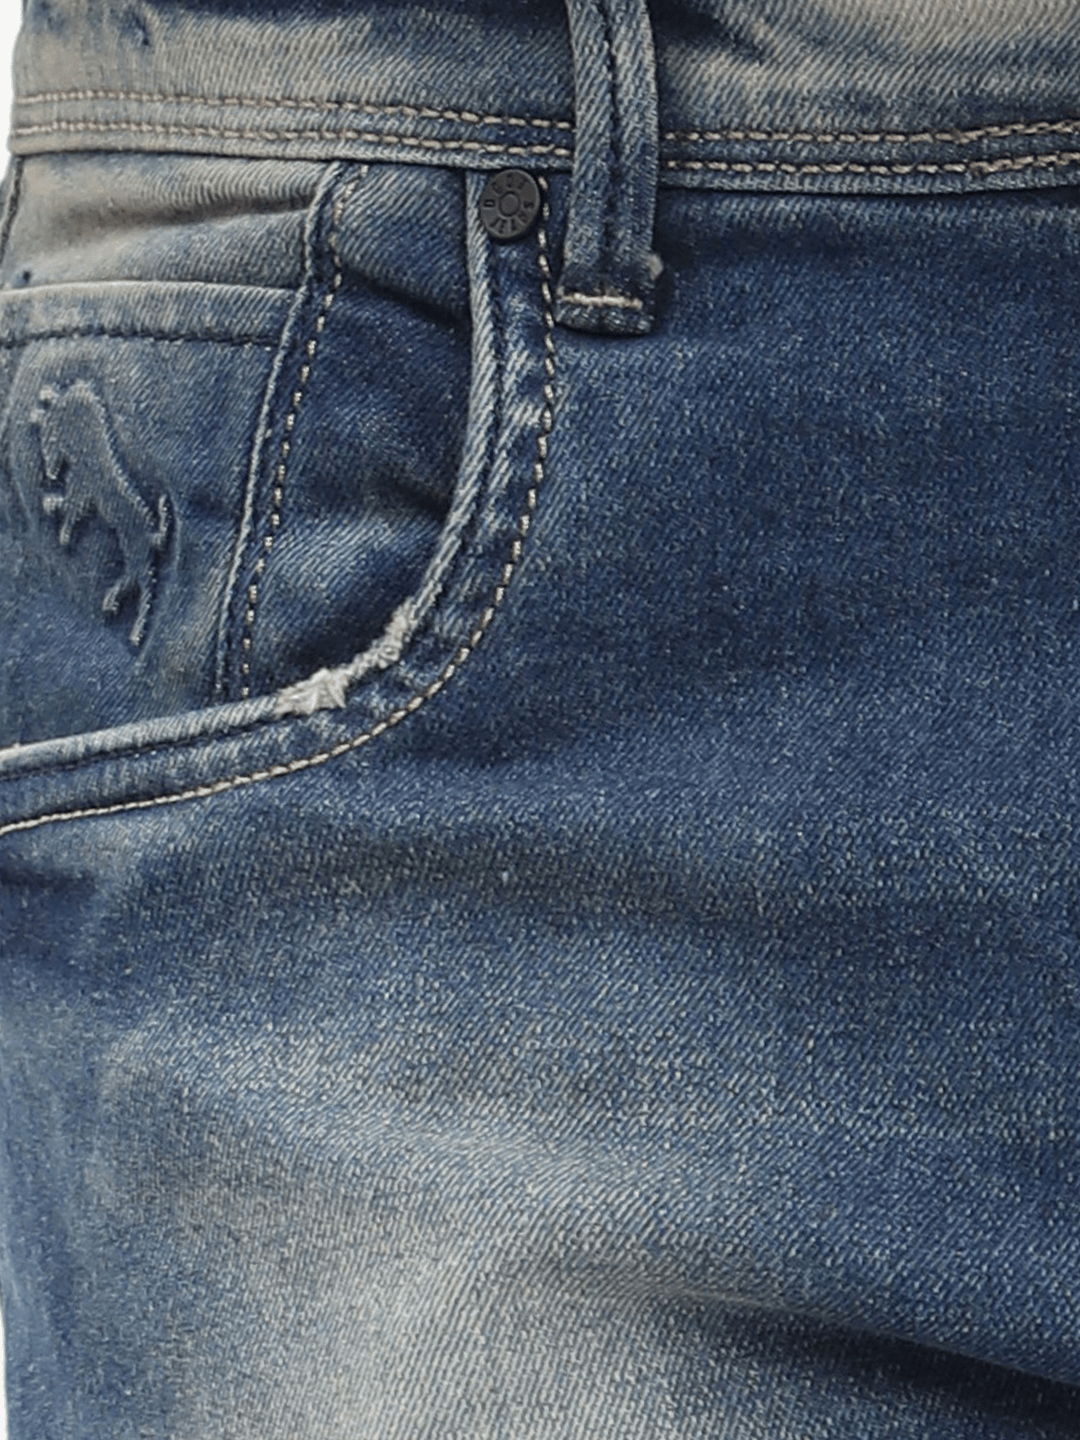 D'cot by Donear | D'cot by Donear Men's Blue Cotton Jeans 4